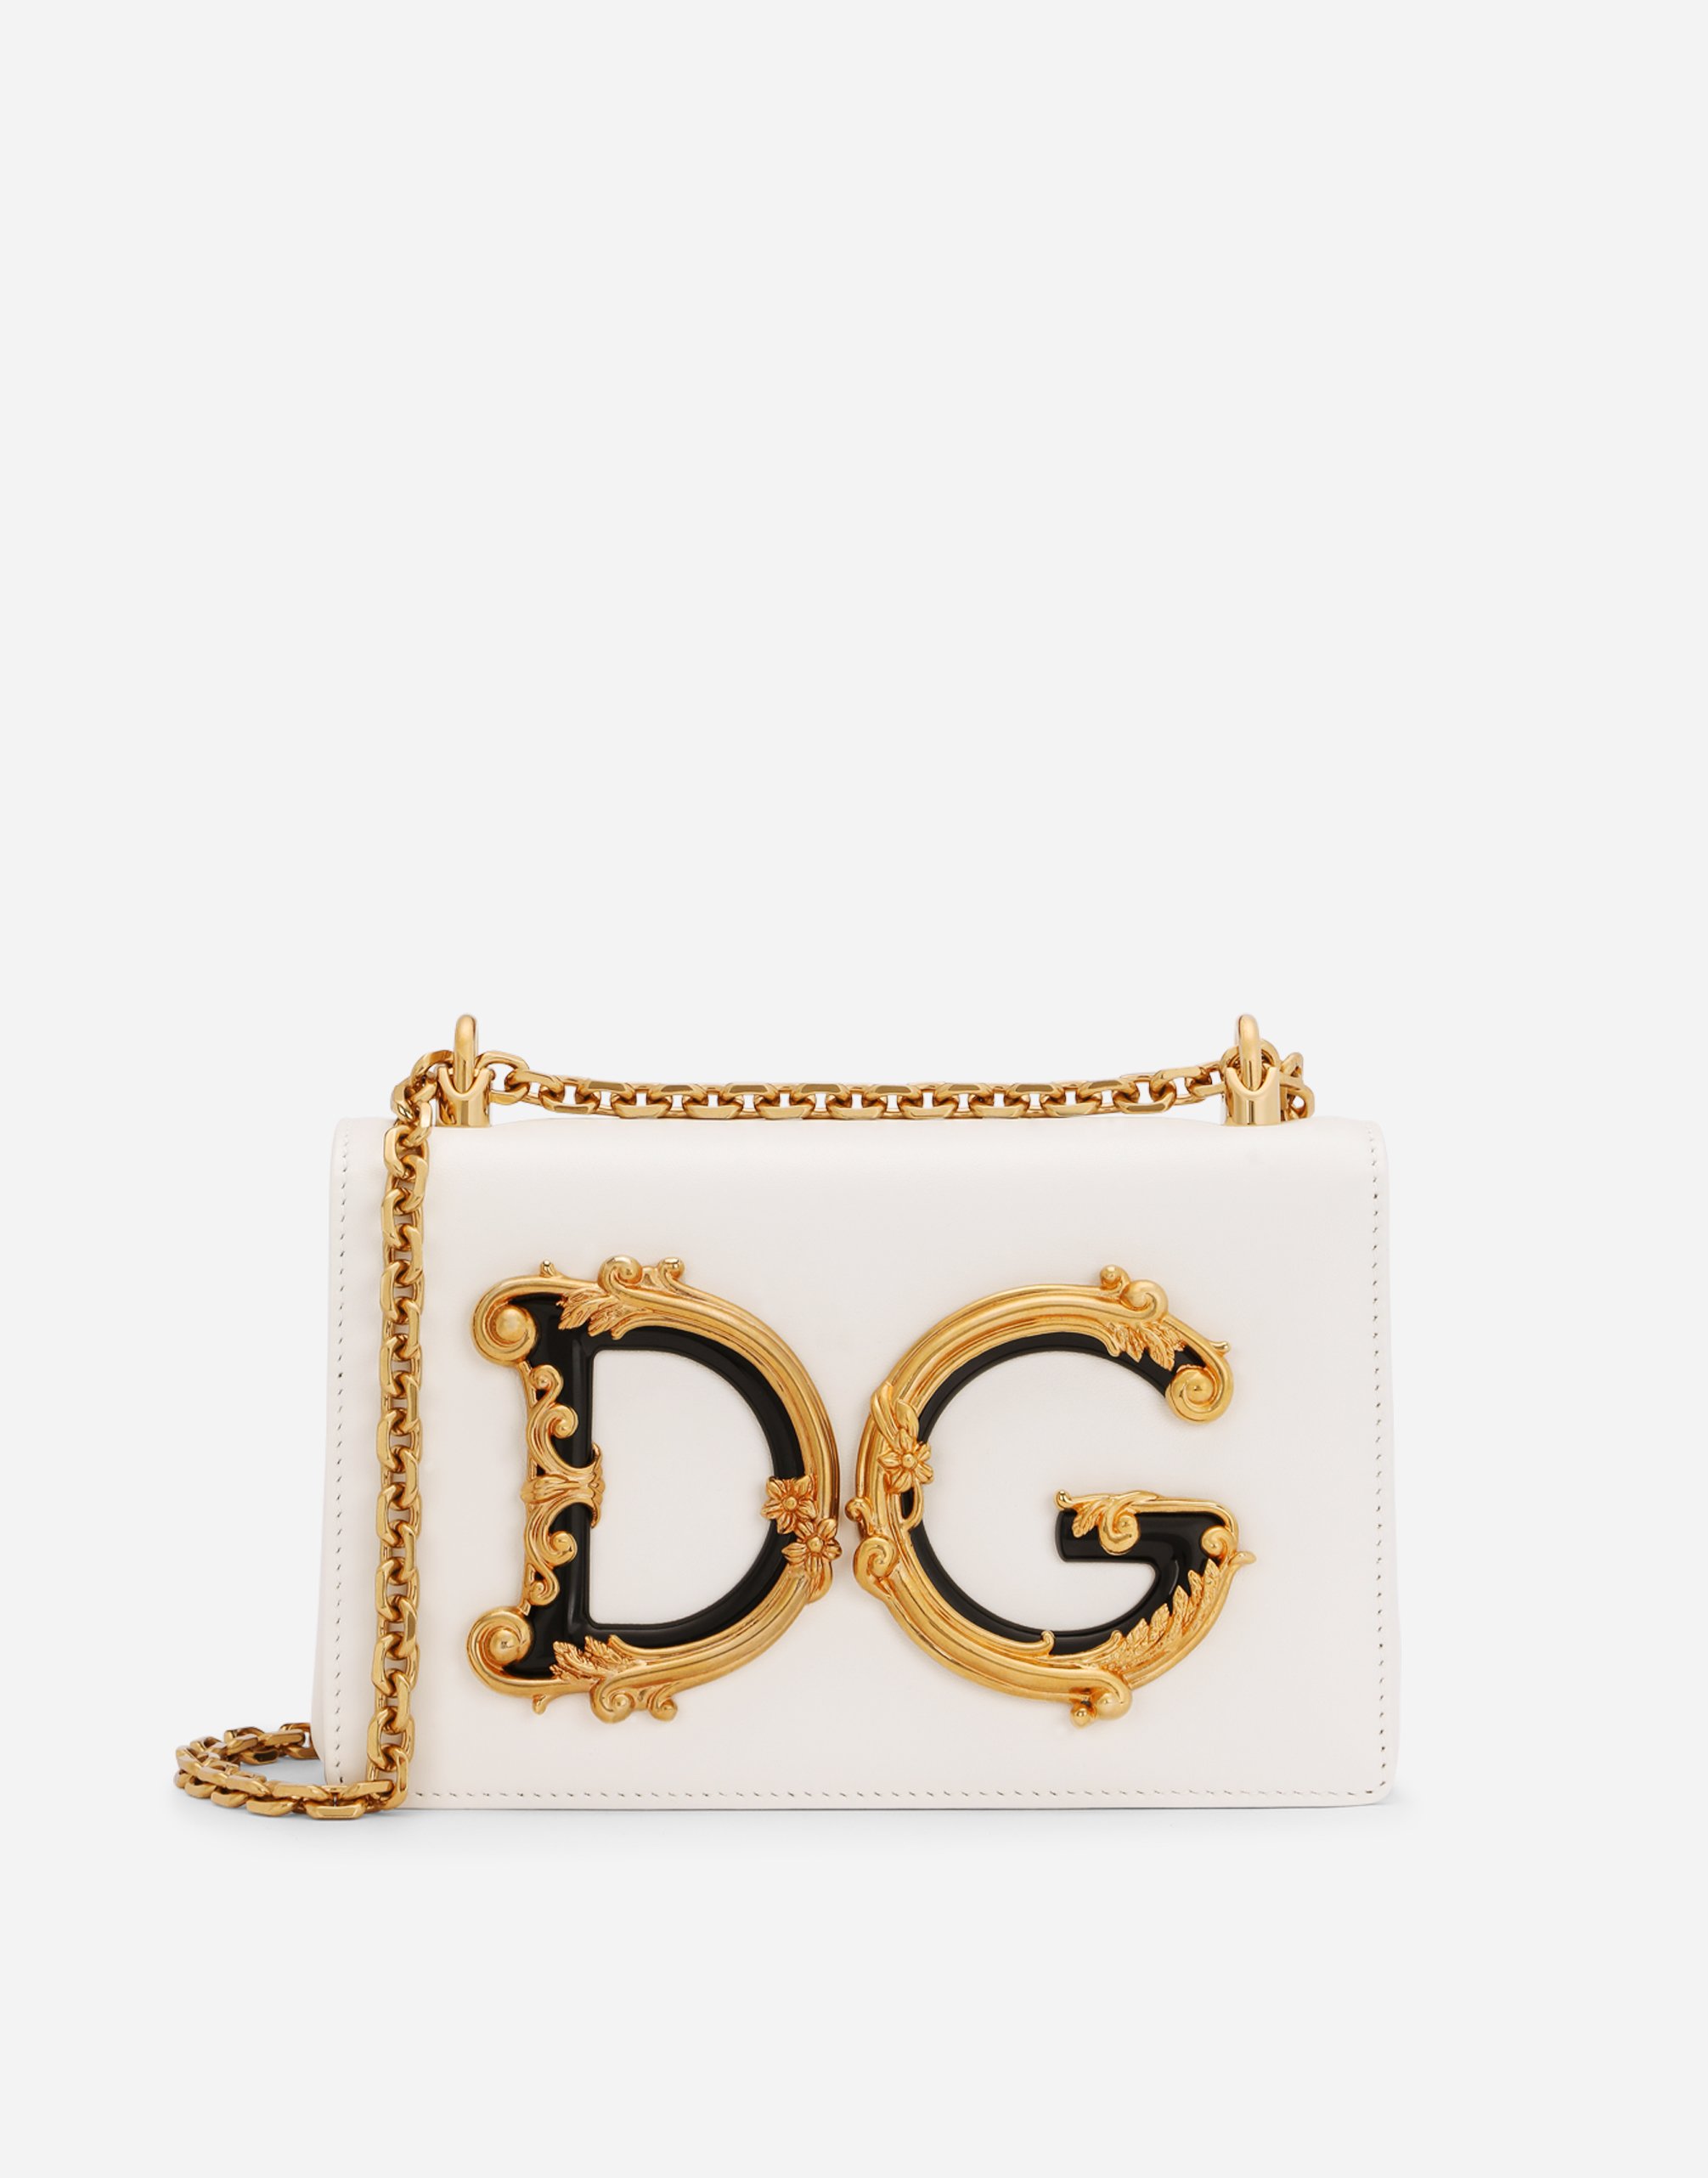 DG Girls shoulder bag in nappa leather in White